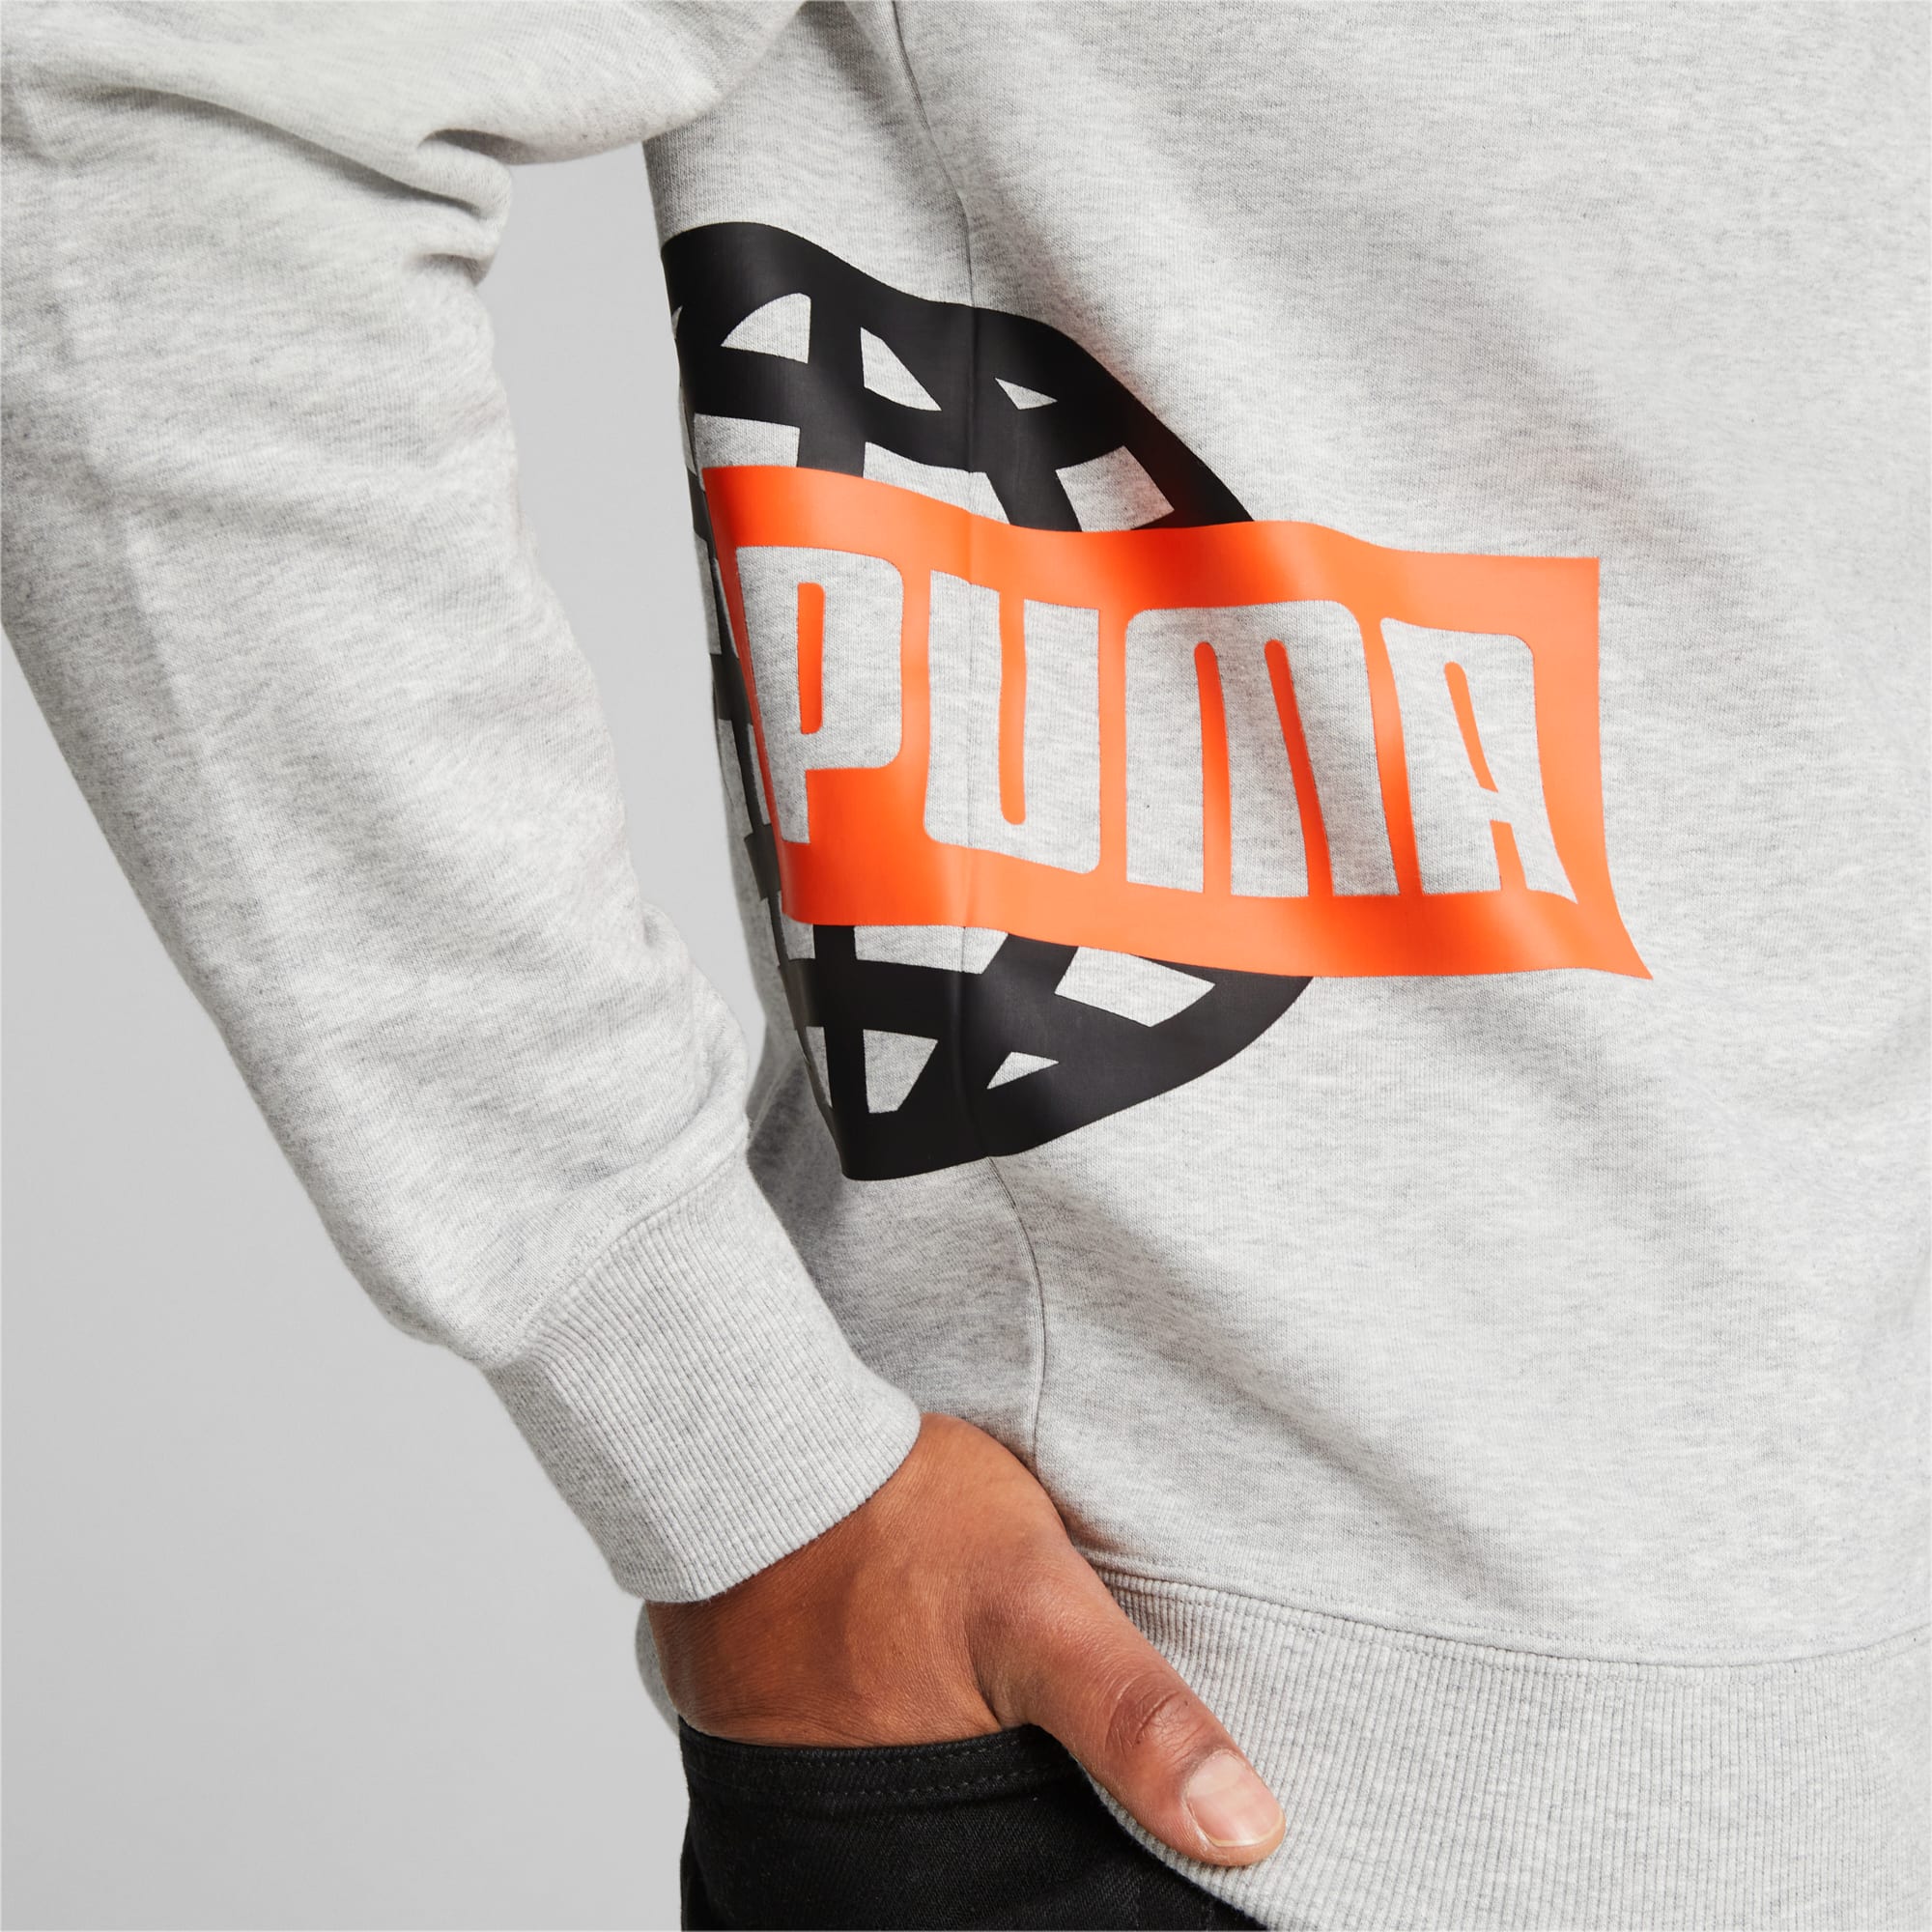 PUMA Classics Brand Love Men's Sweatshirt, Light Grey Heather, Size XS, Clothing